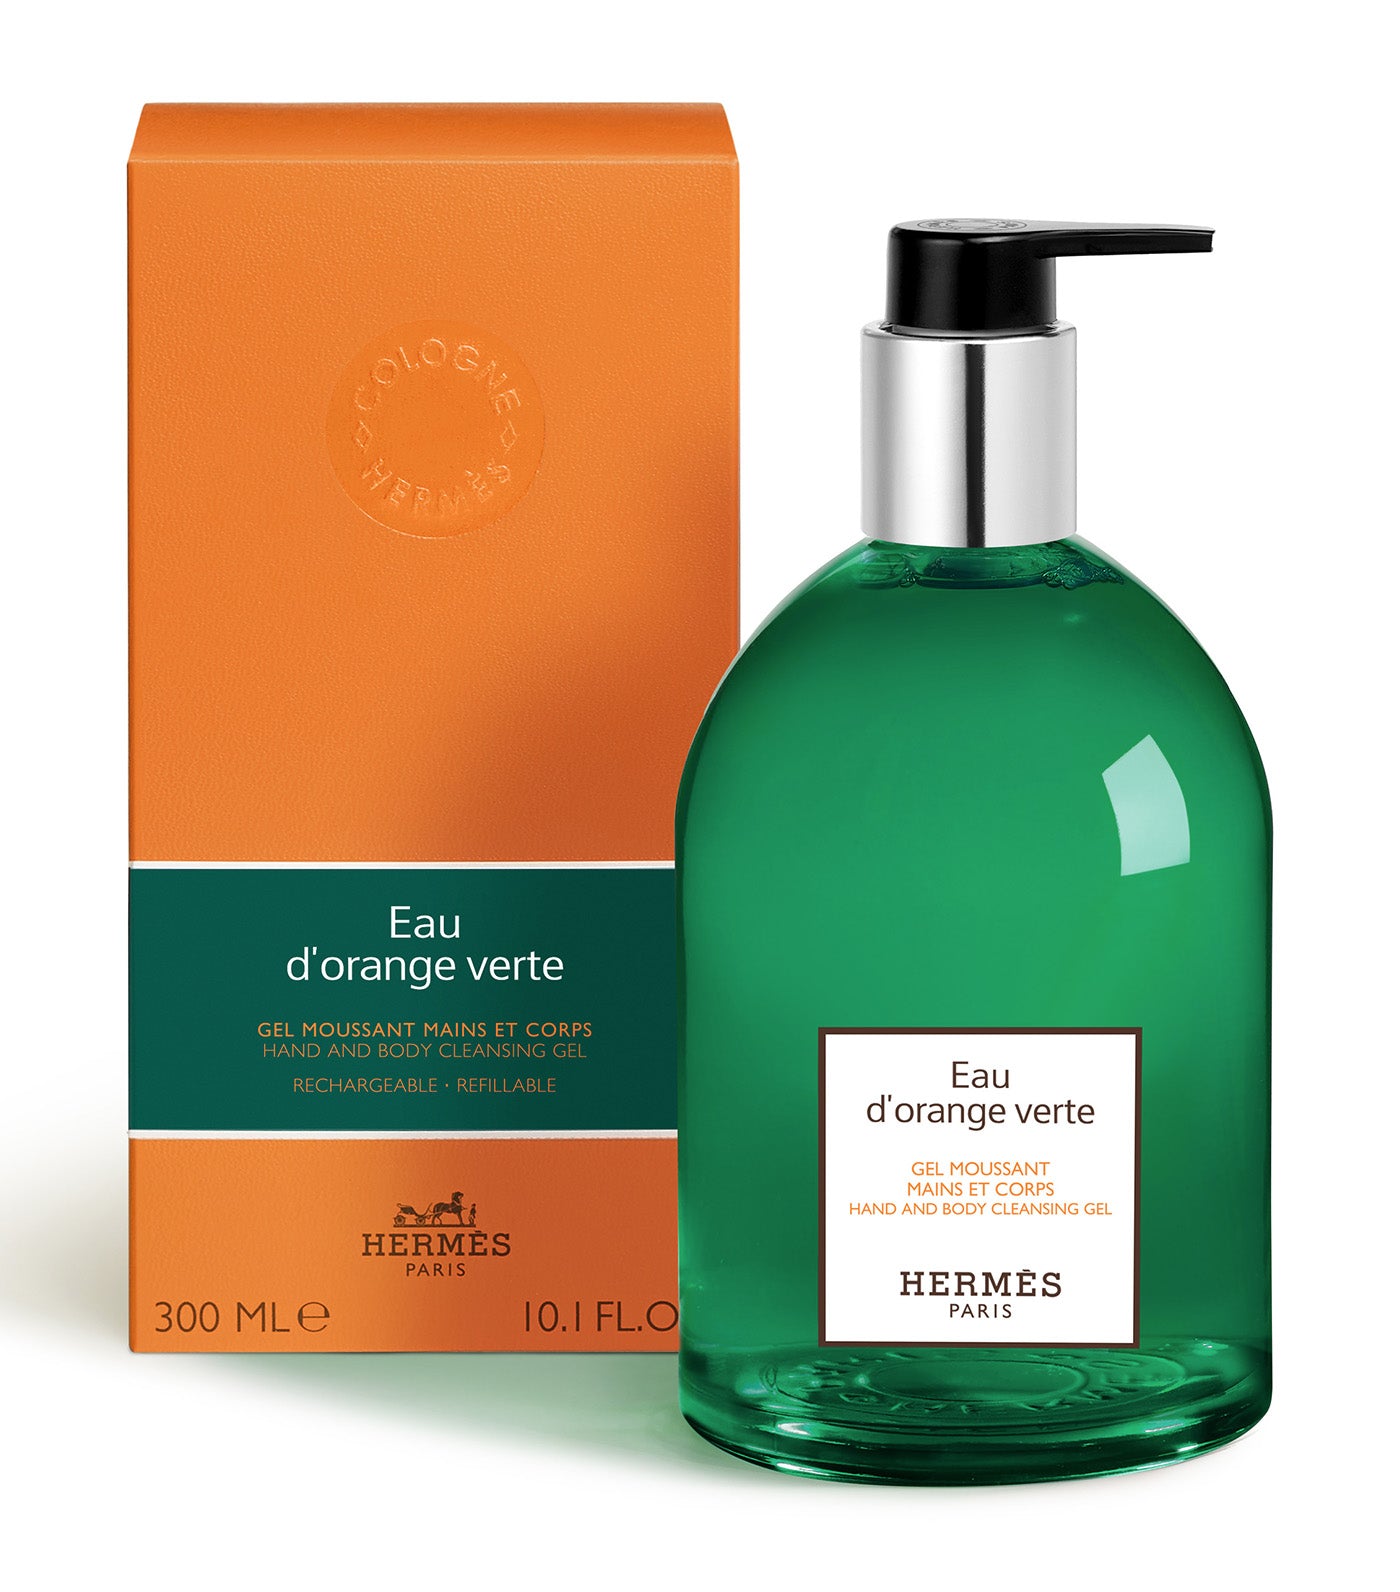 Eau d'orange verte, Hand and Body Cleansing Gel